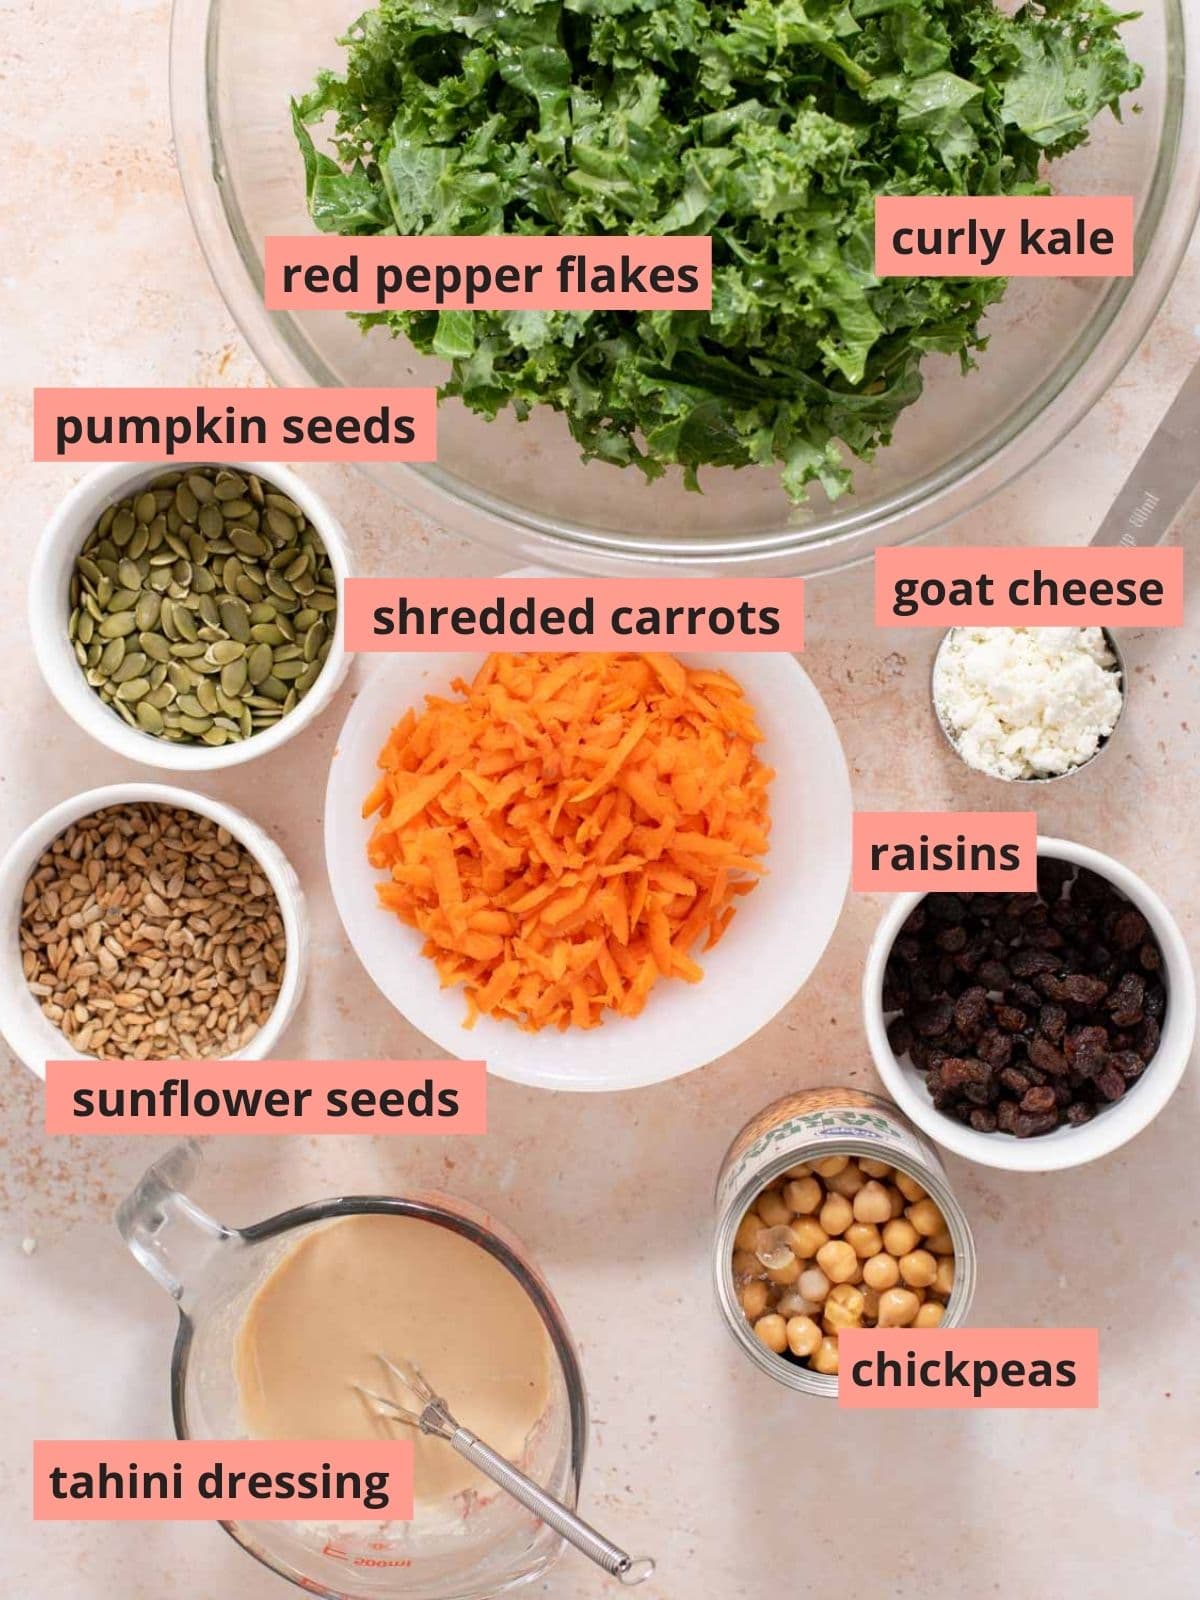 Labeled ingredients used to make kale salad